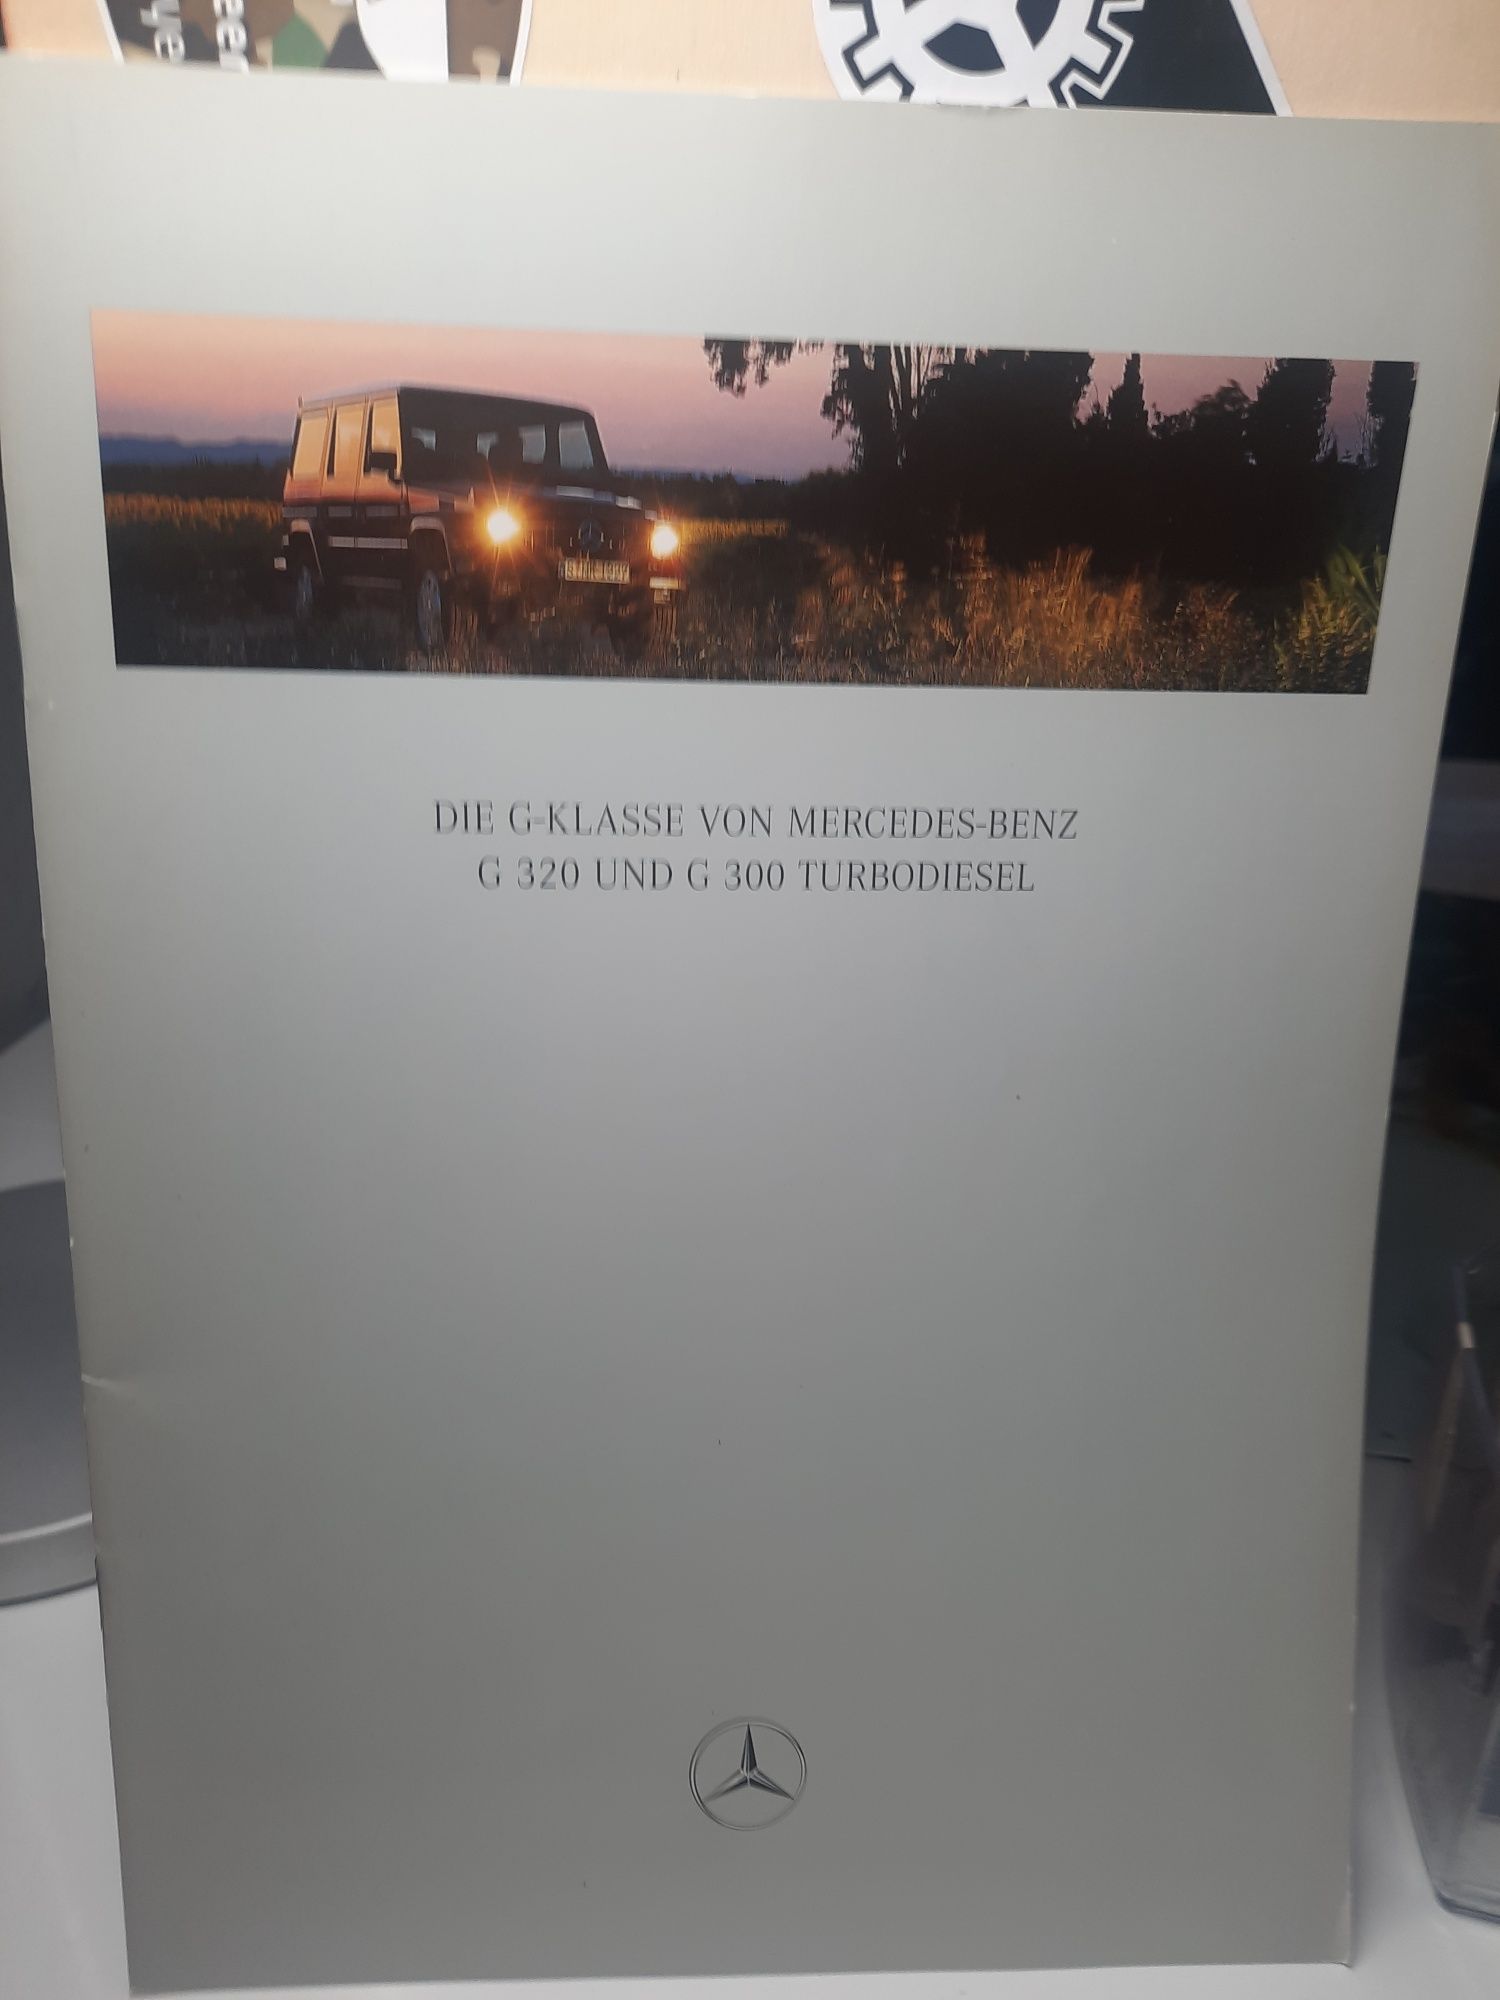 Prodpekt Katalog Mercedes G320-300turbodiesel